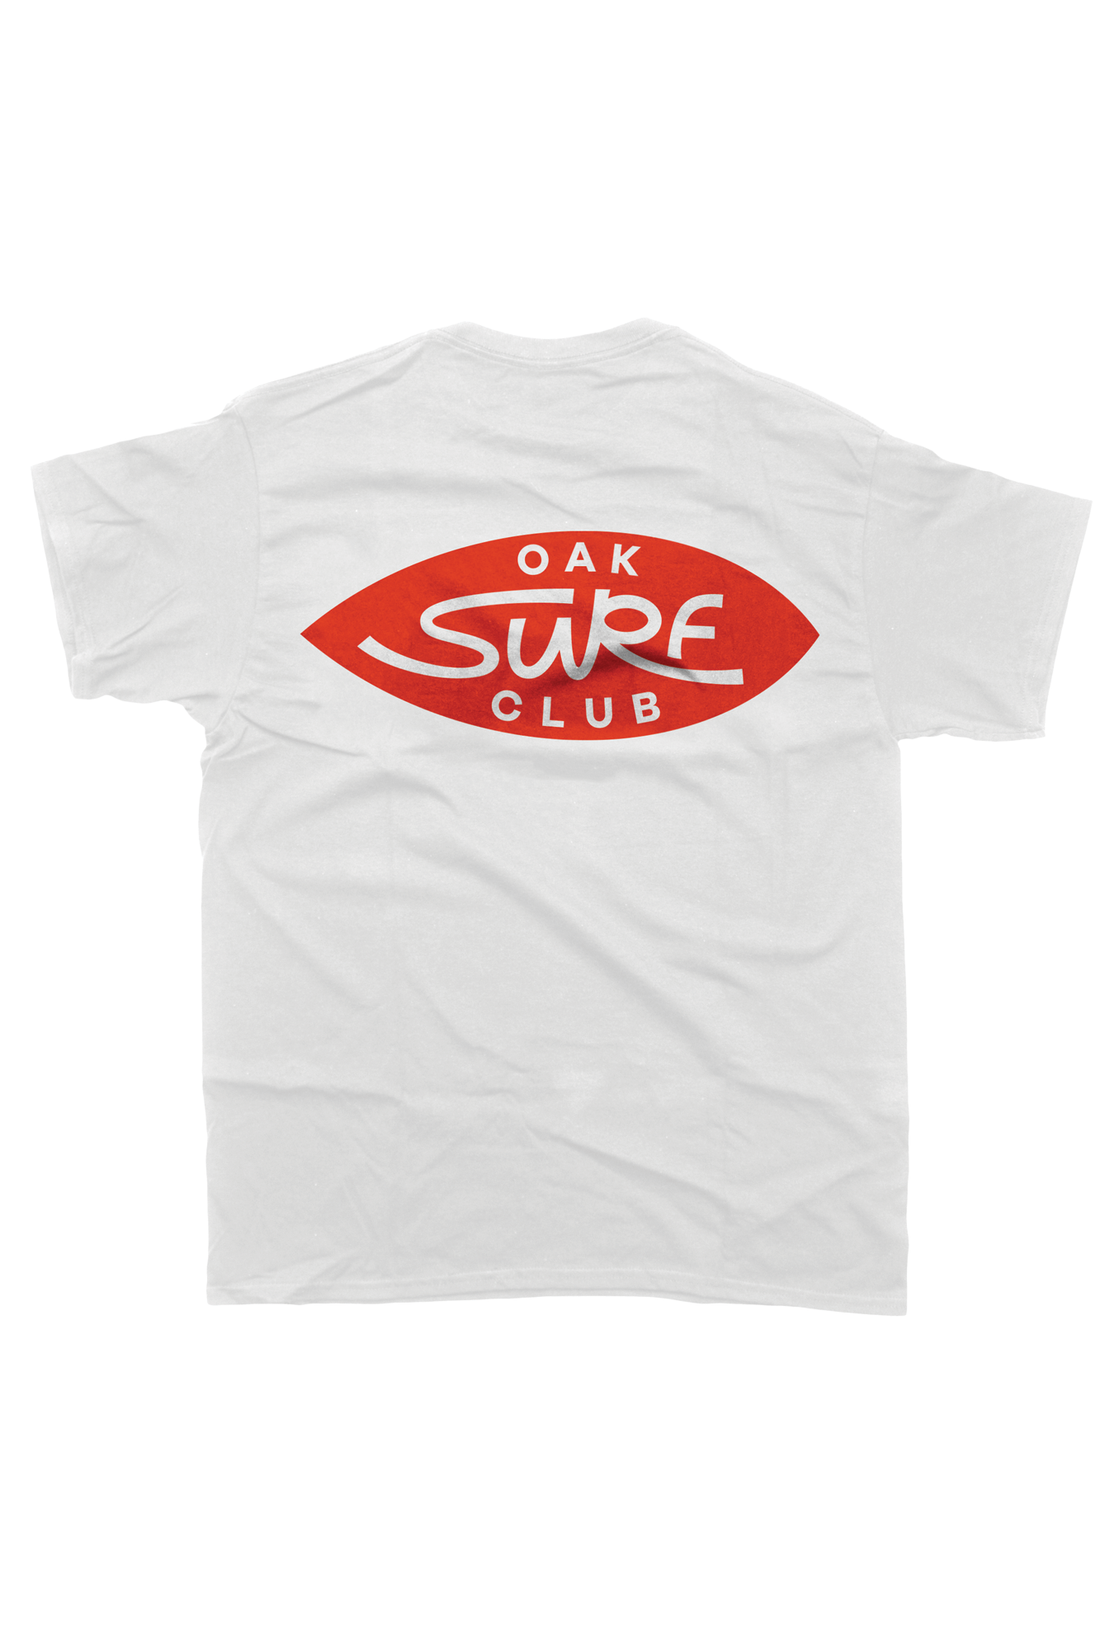 OAK SURF CLUB UNISEX OG TEE - WHITE/RED TSHIRT OAK SURF CLUB   